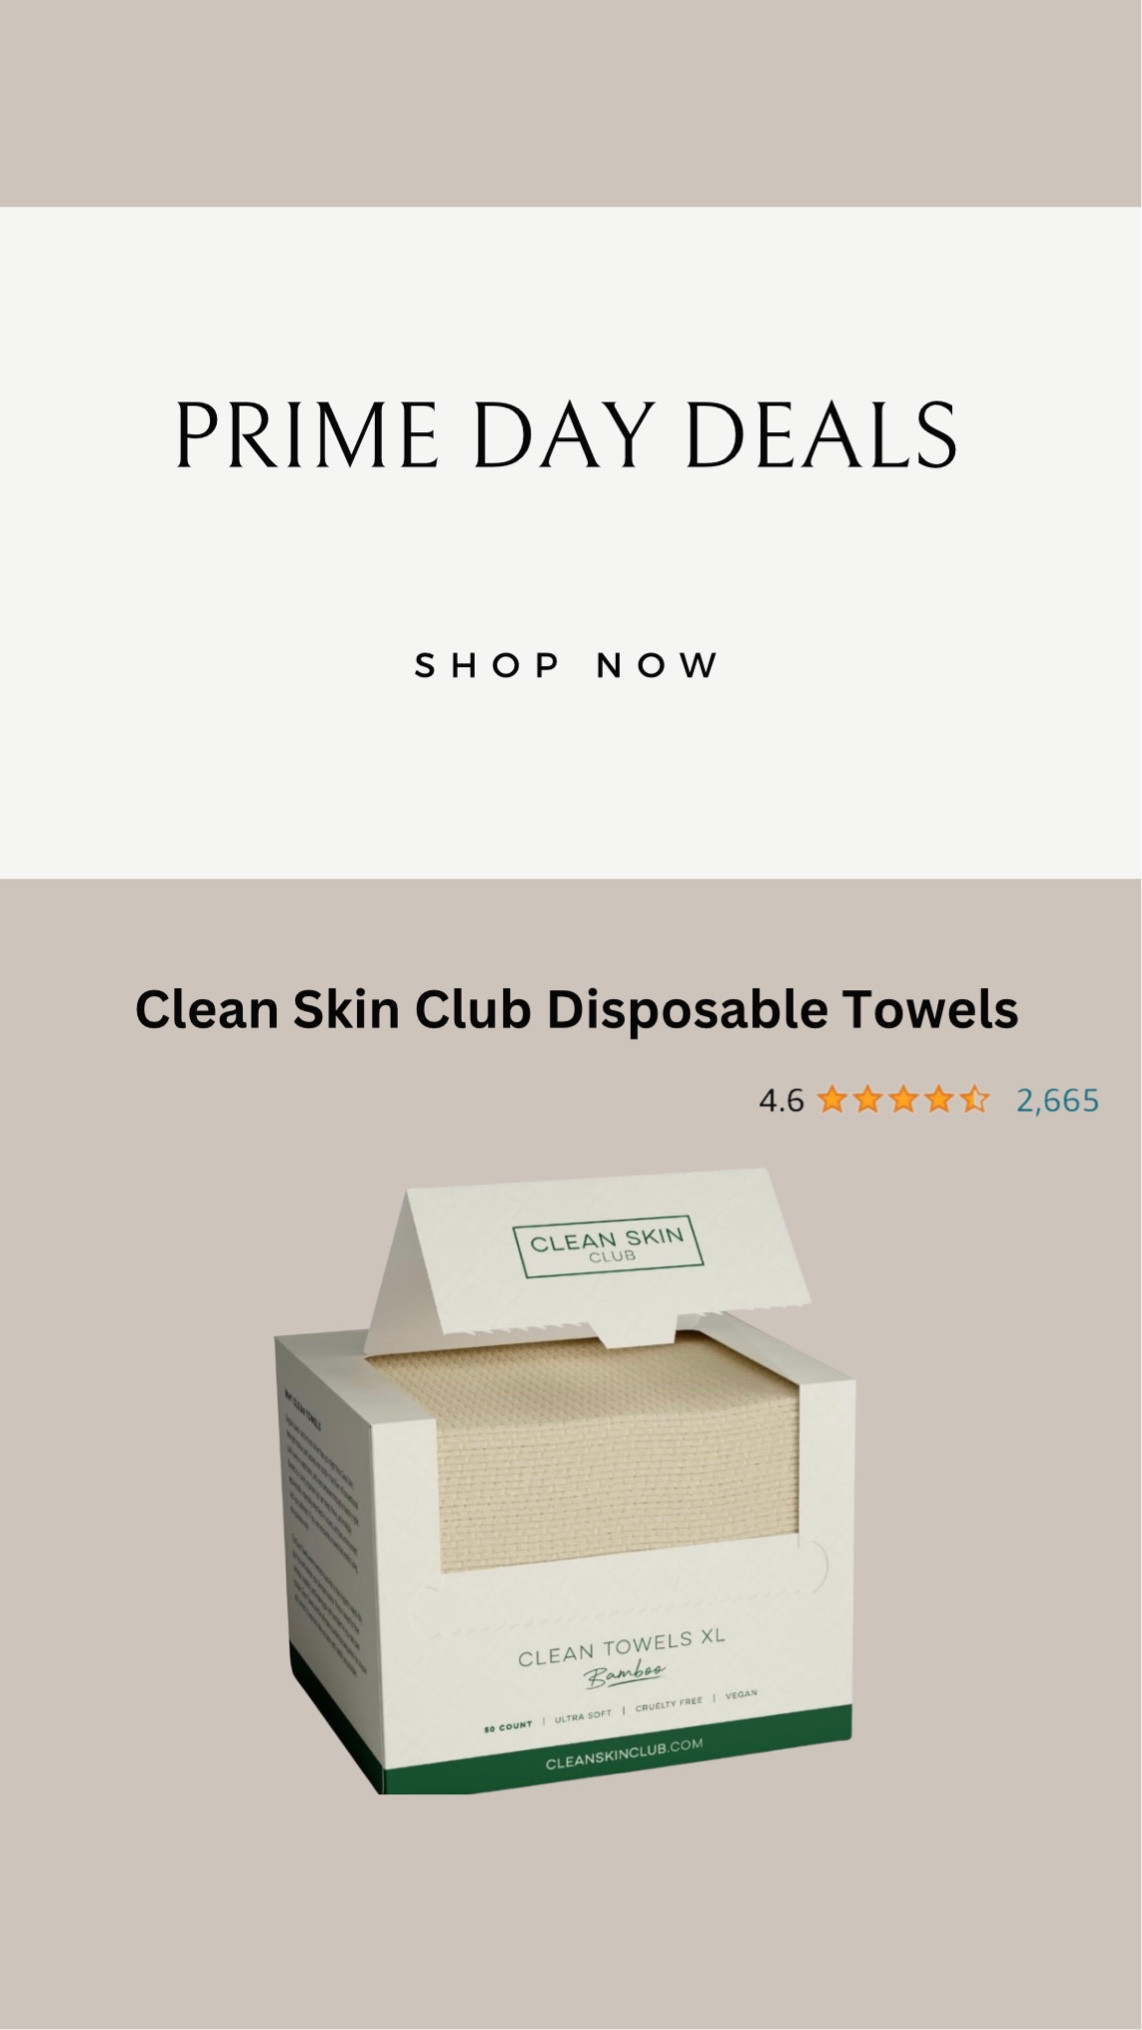 Clean Skin Club Bamboo Clean Towels XL, Award Winning Disposable Face